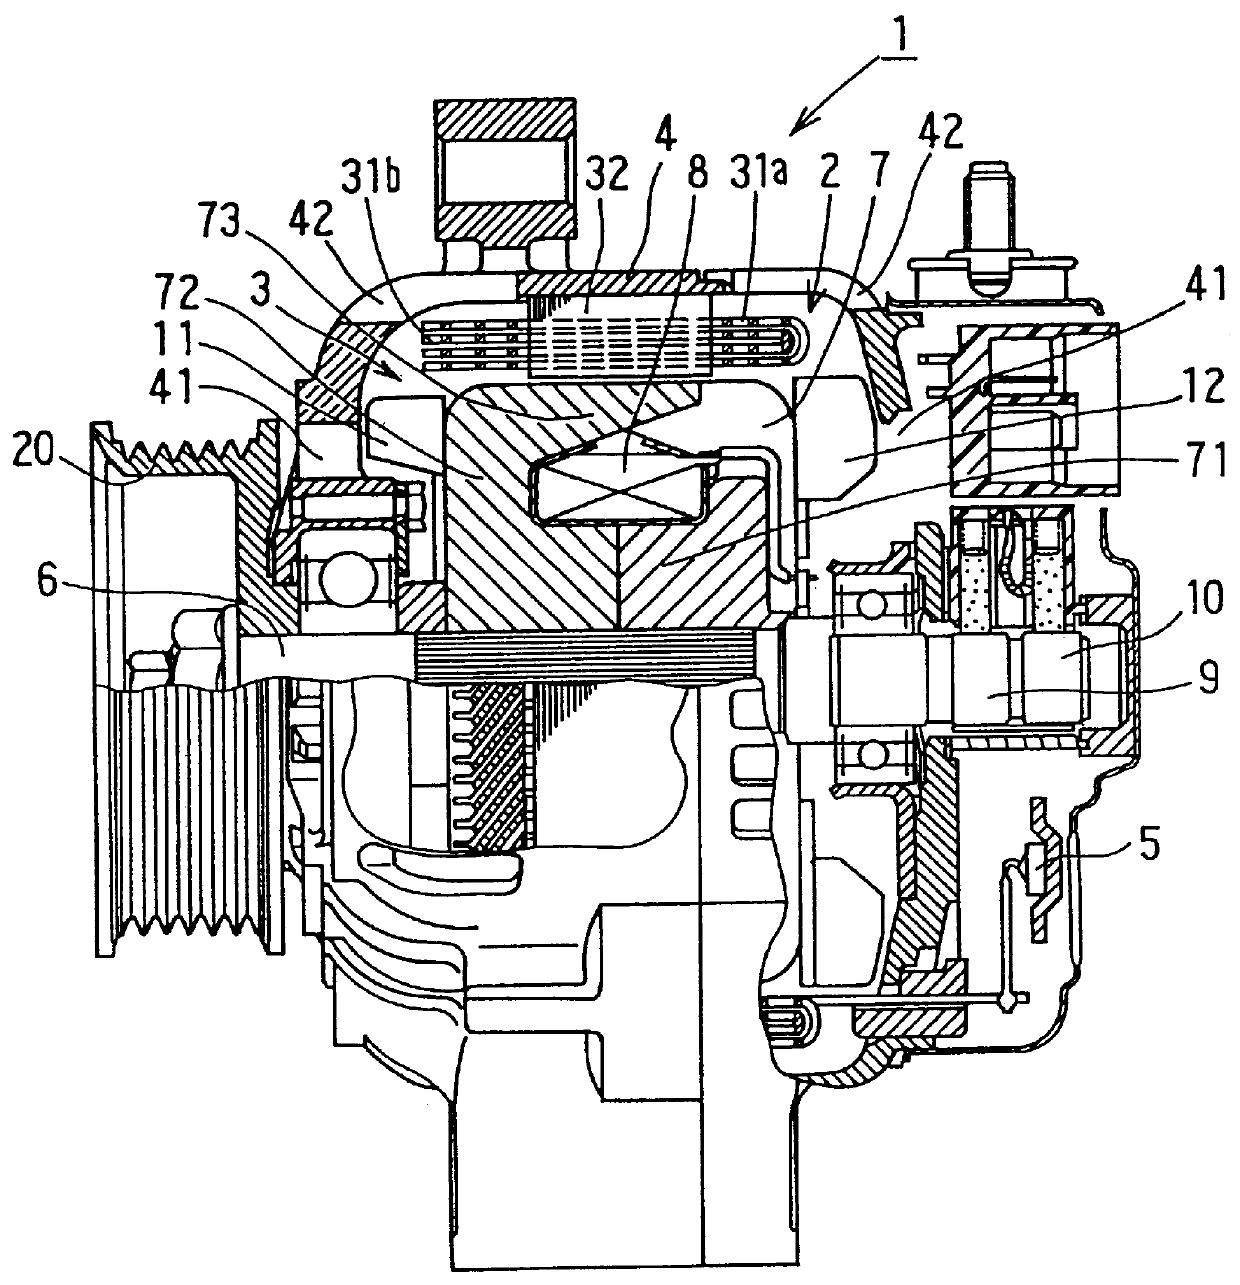 Stator arrangement of alternator for vehicle